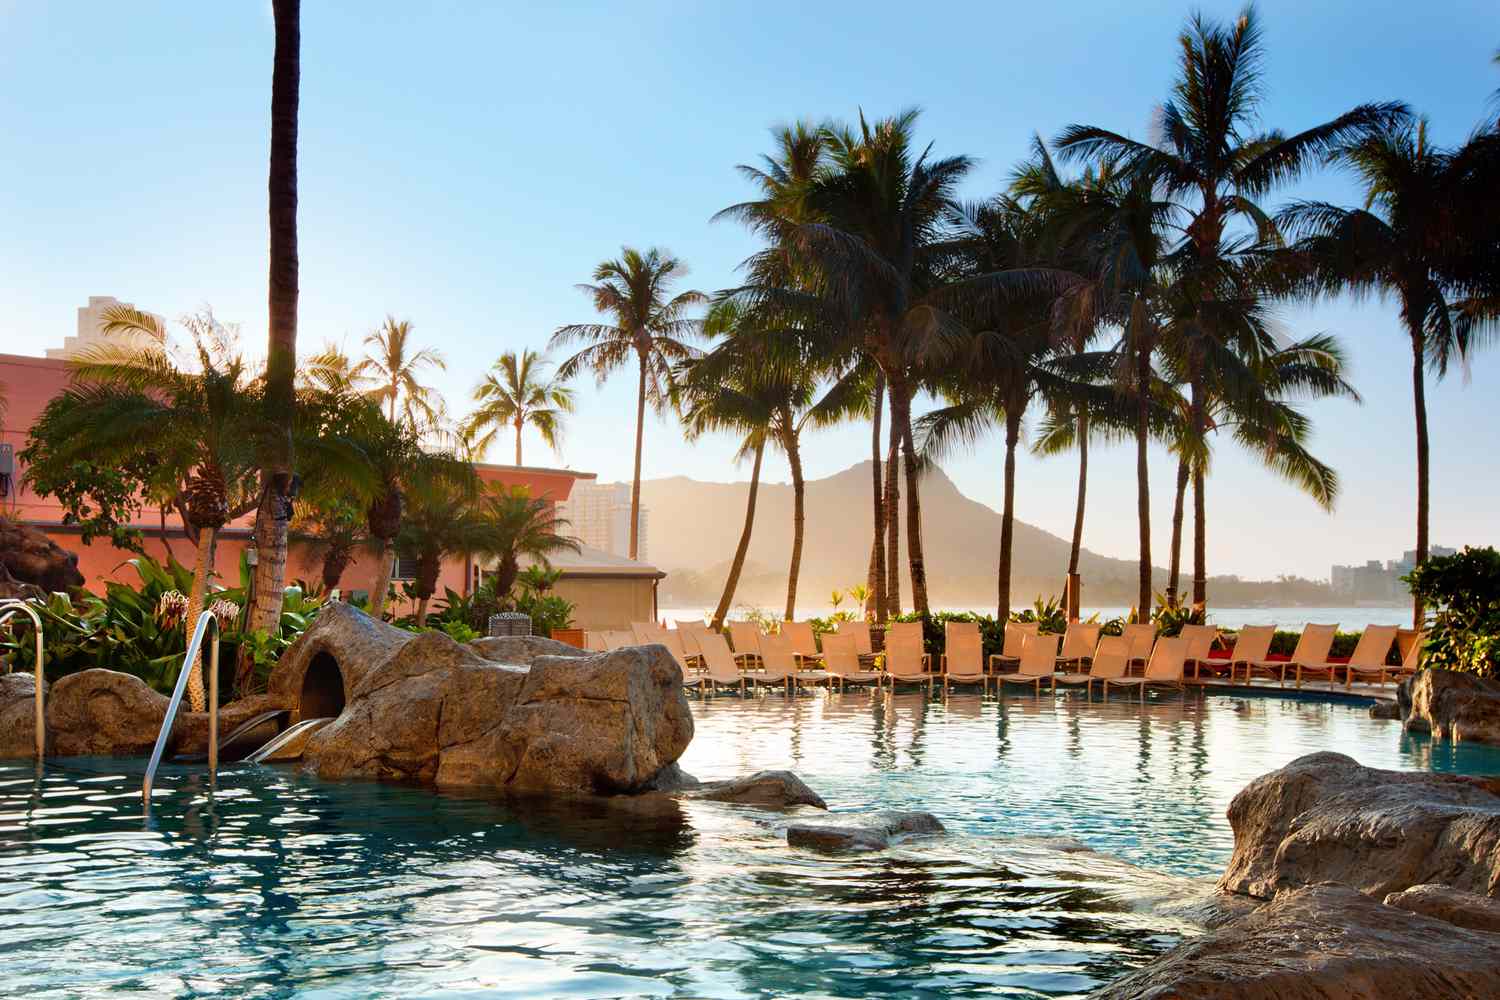 Outdoor pool area at The Royal Hawaiian